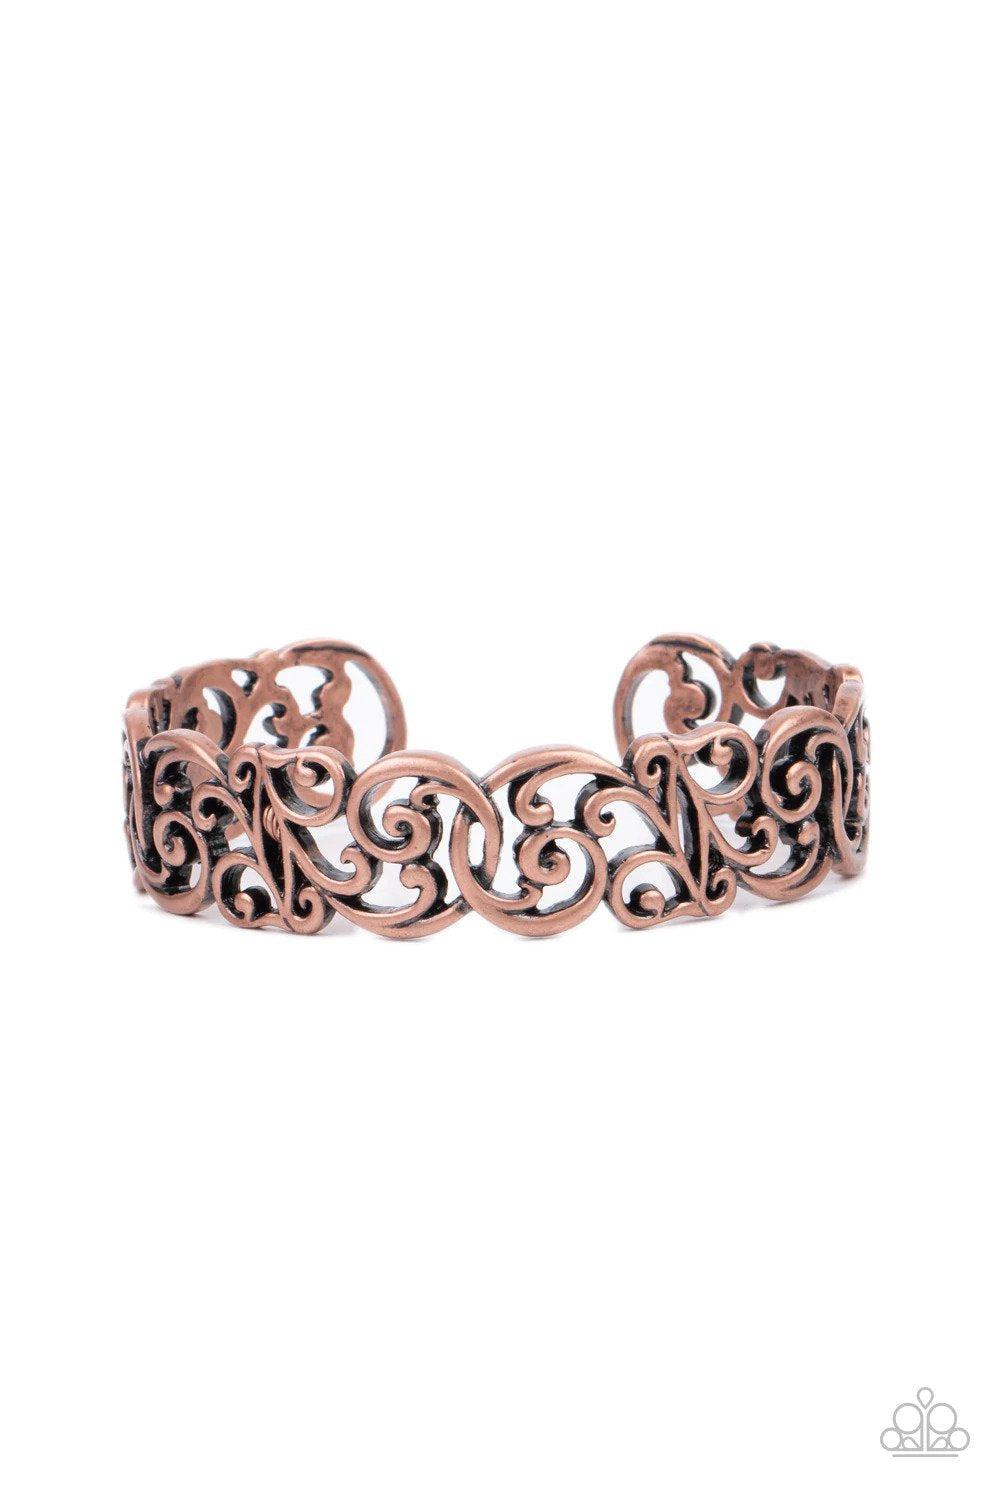 Wild Vineyards Copper Bracelet - Paparazzi Accessories- lightbox - CarasShop.com - $5 Jewelry by Cara Jewels